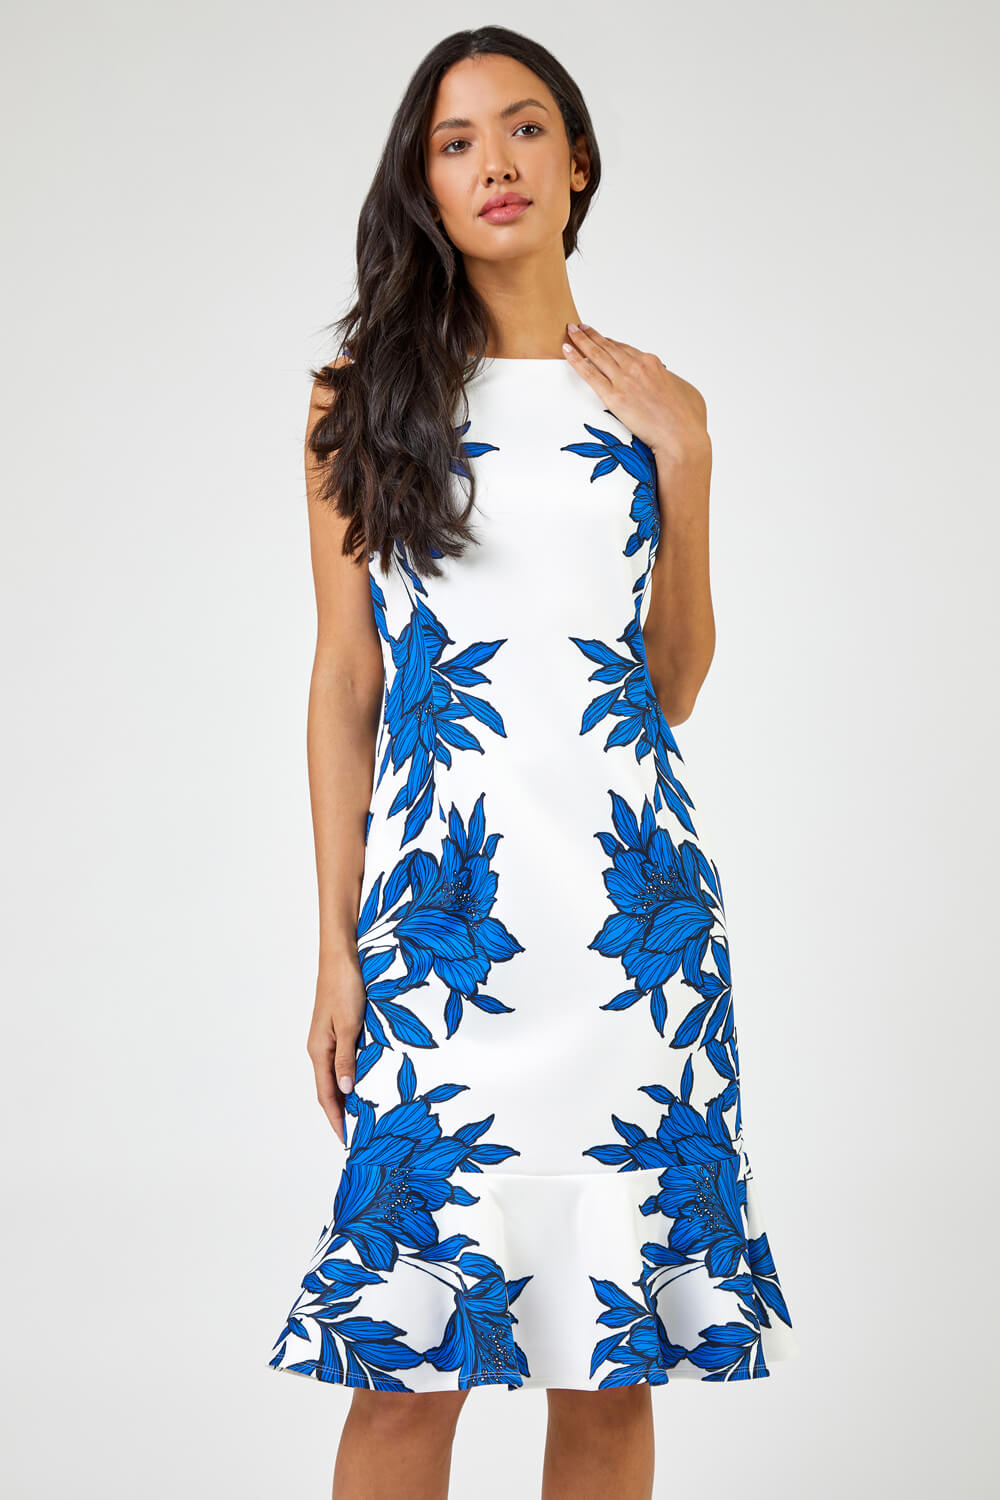 Royal Blue Floral Border Print Frill Stretch Dress, Image 3 of 5